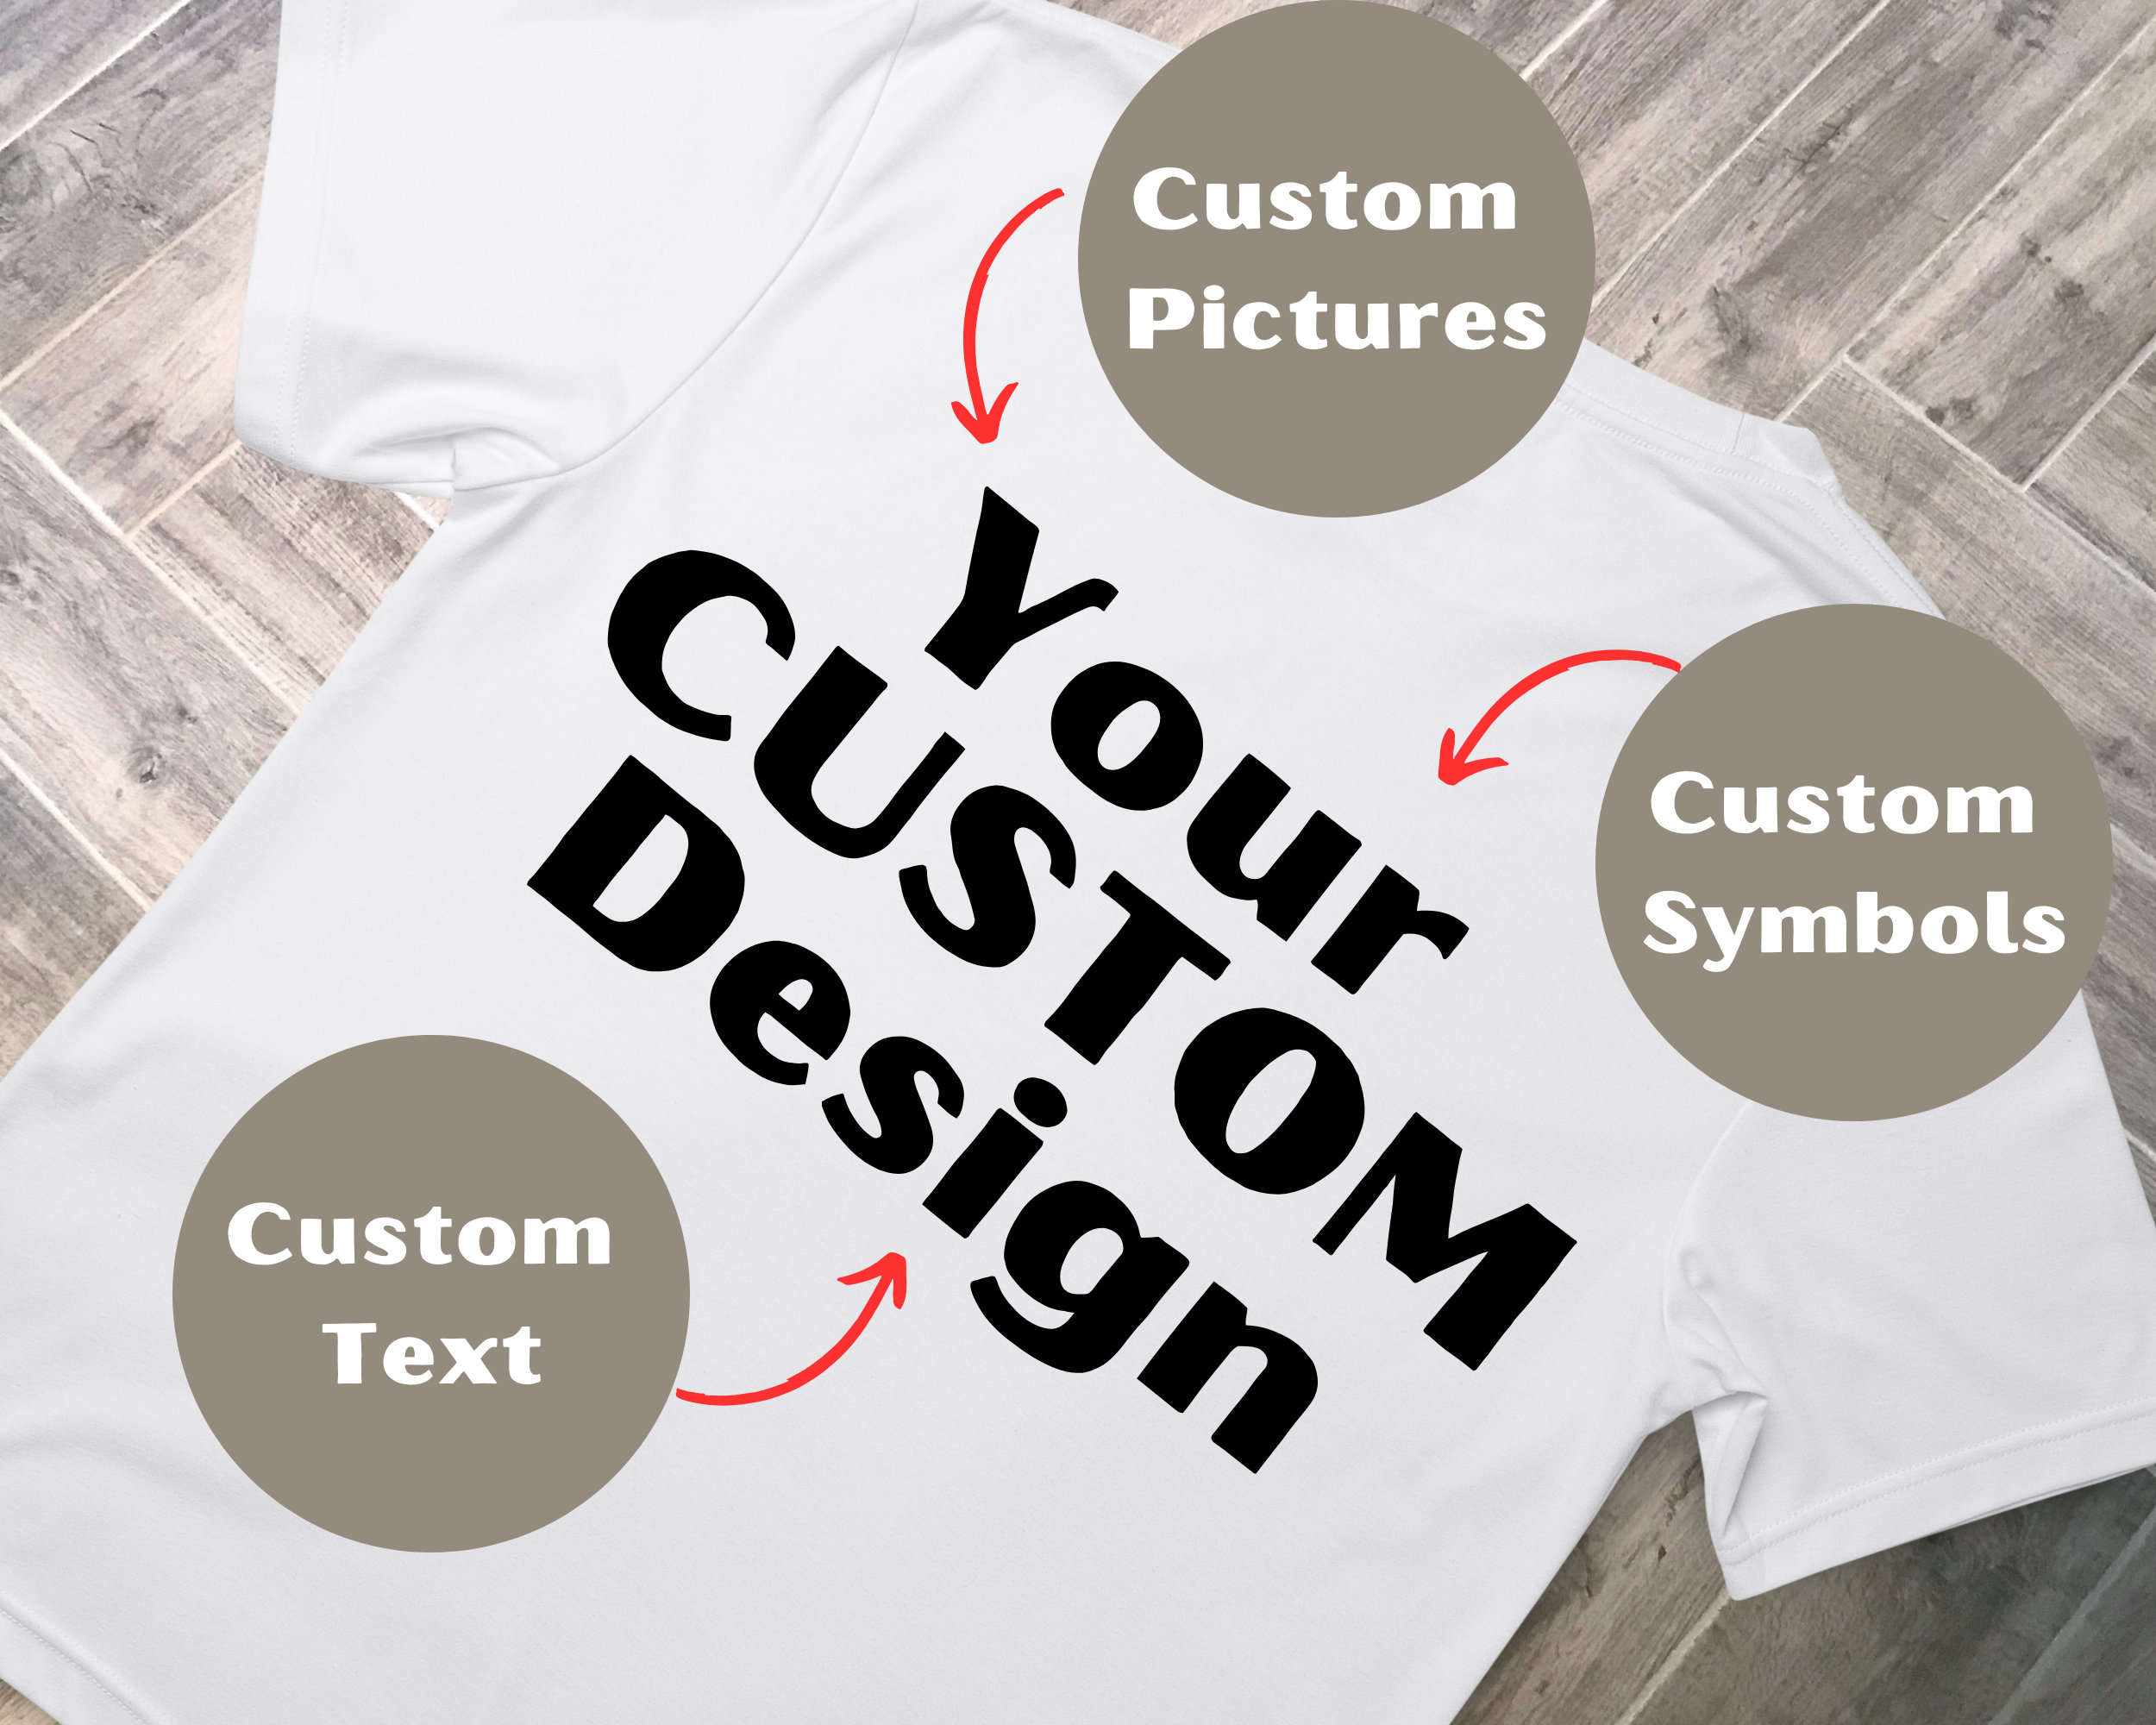 Anime Club T-Shirt Design Ideas - Custom Anime Club Shirts & Clipart -  Design Online